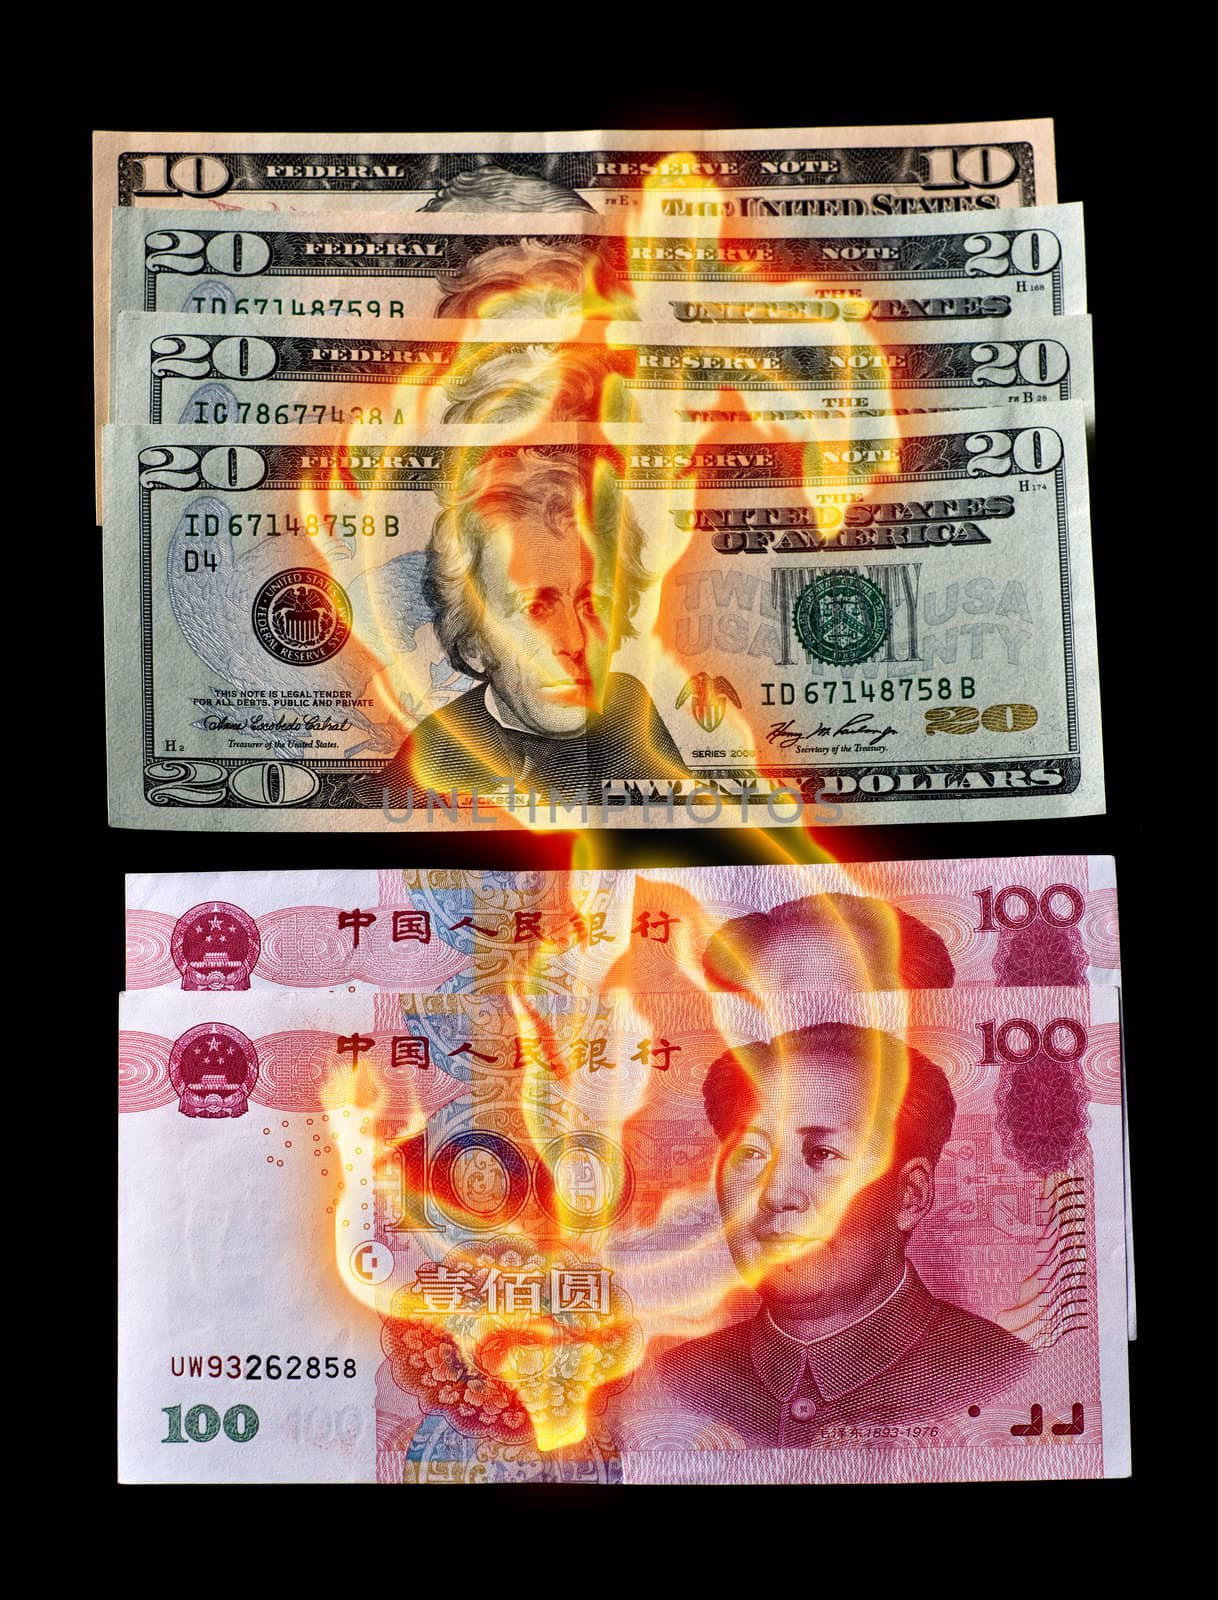 Burning dollar sign over paper money